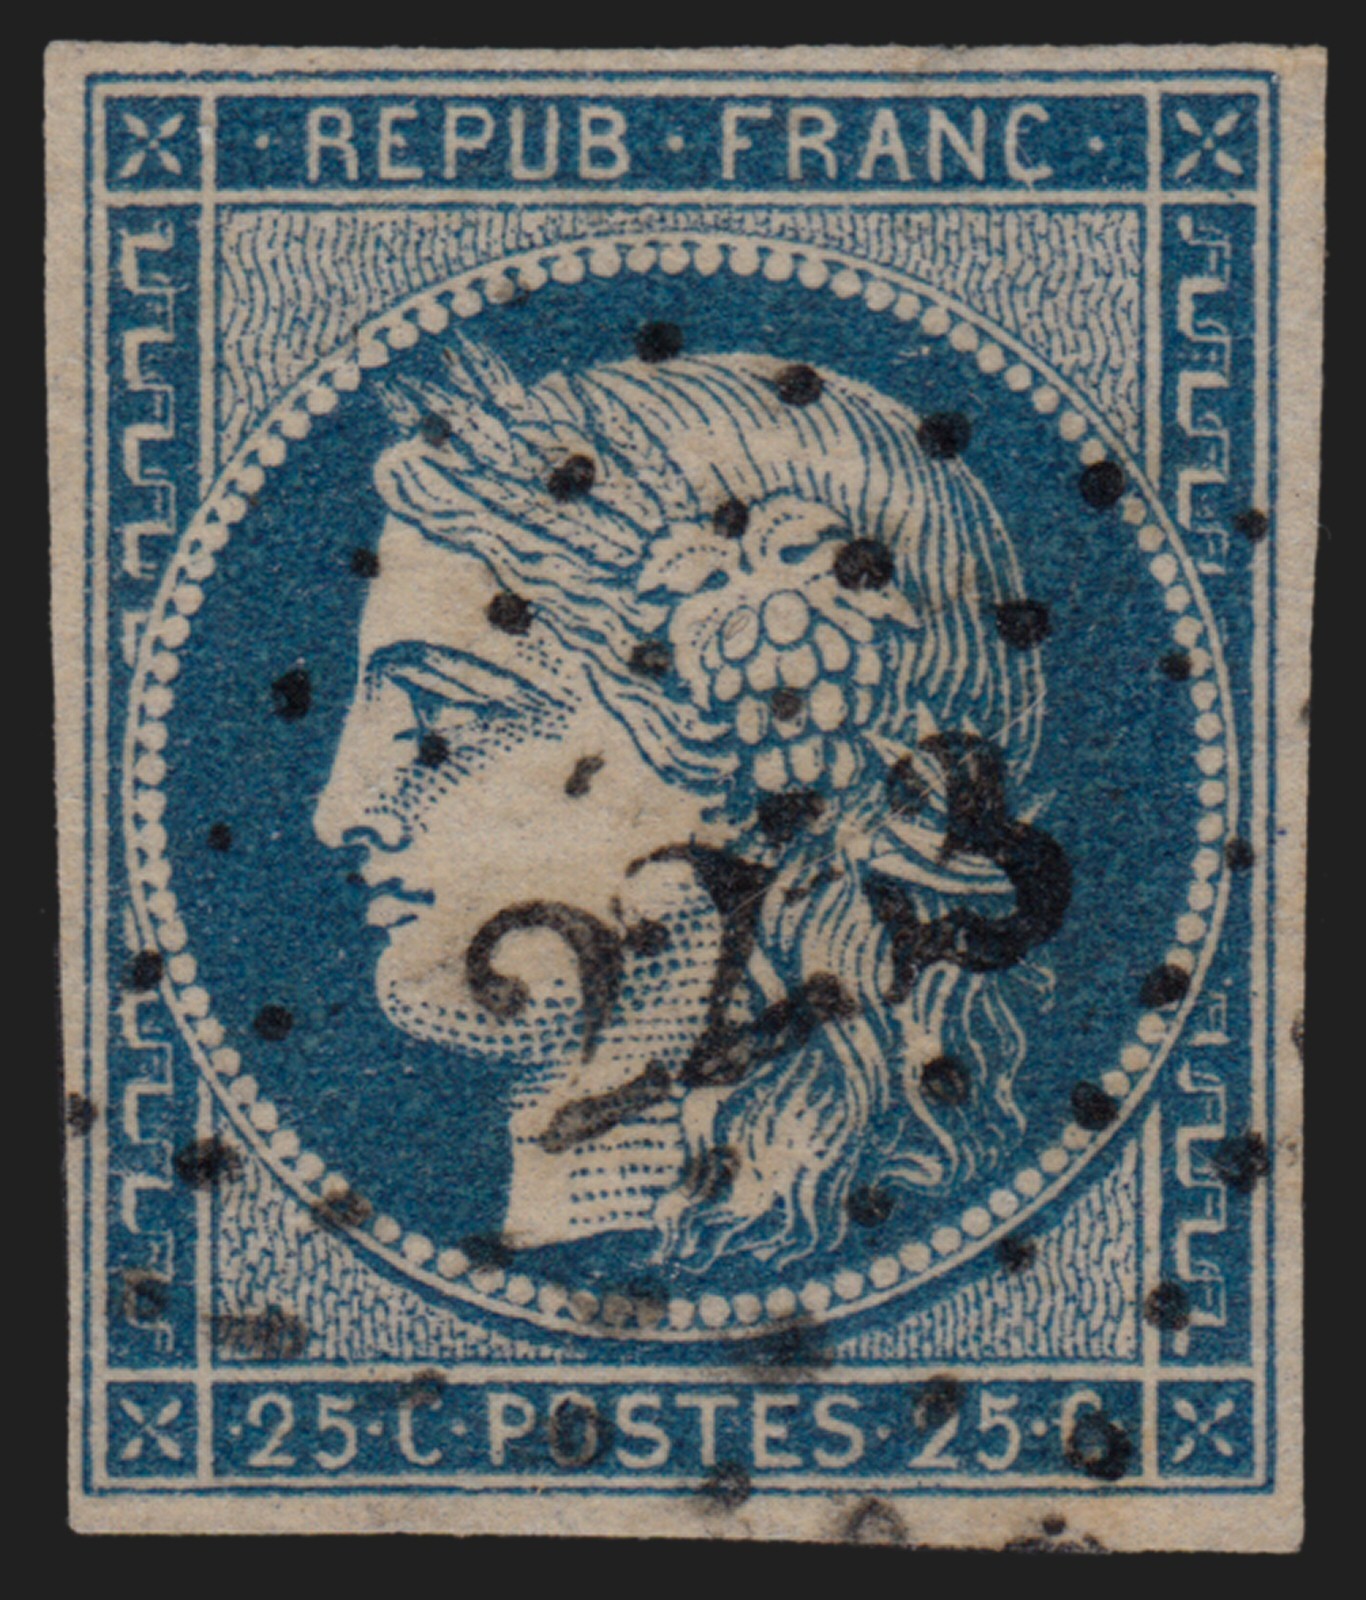 FRANCE TIMBRE-POSTE N°60A au type Cérès 25 c. bleu avec variété imp